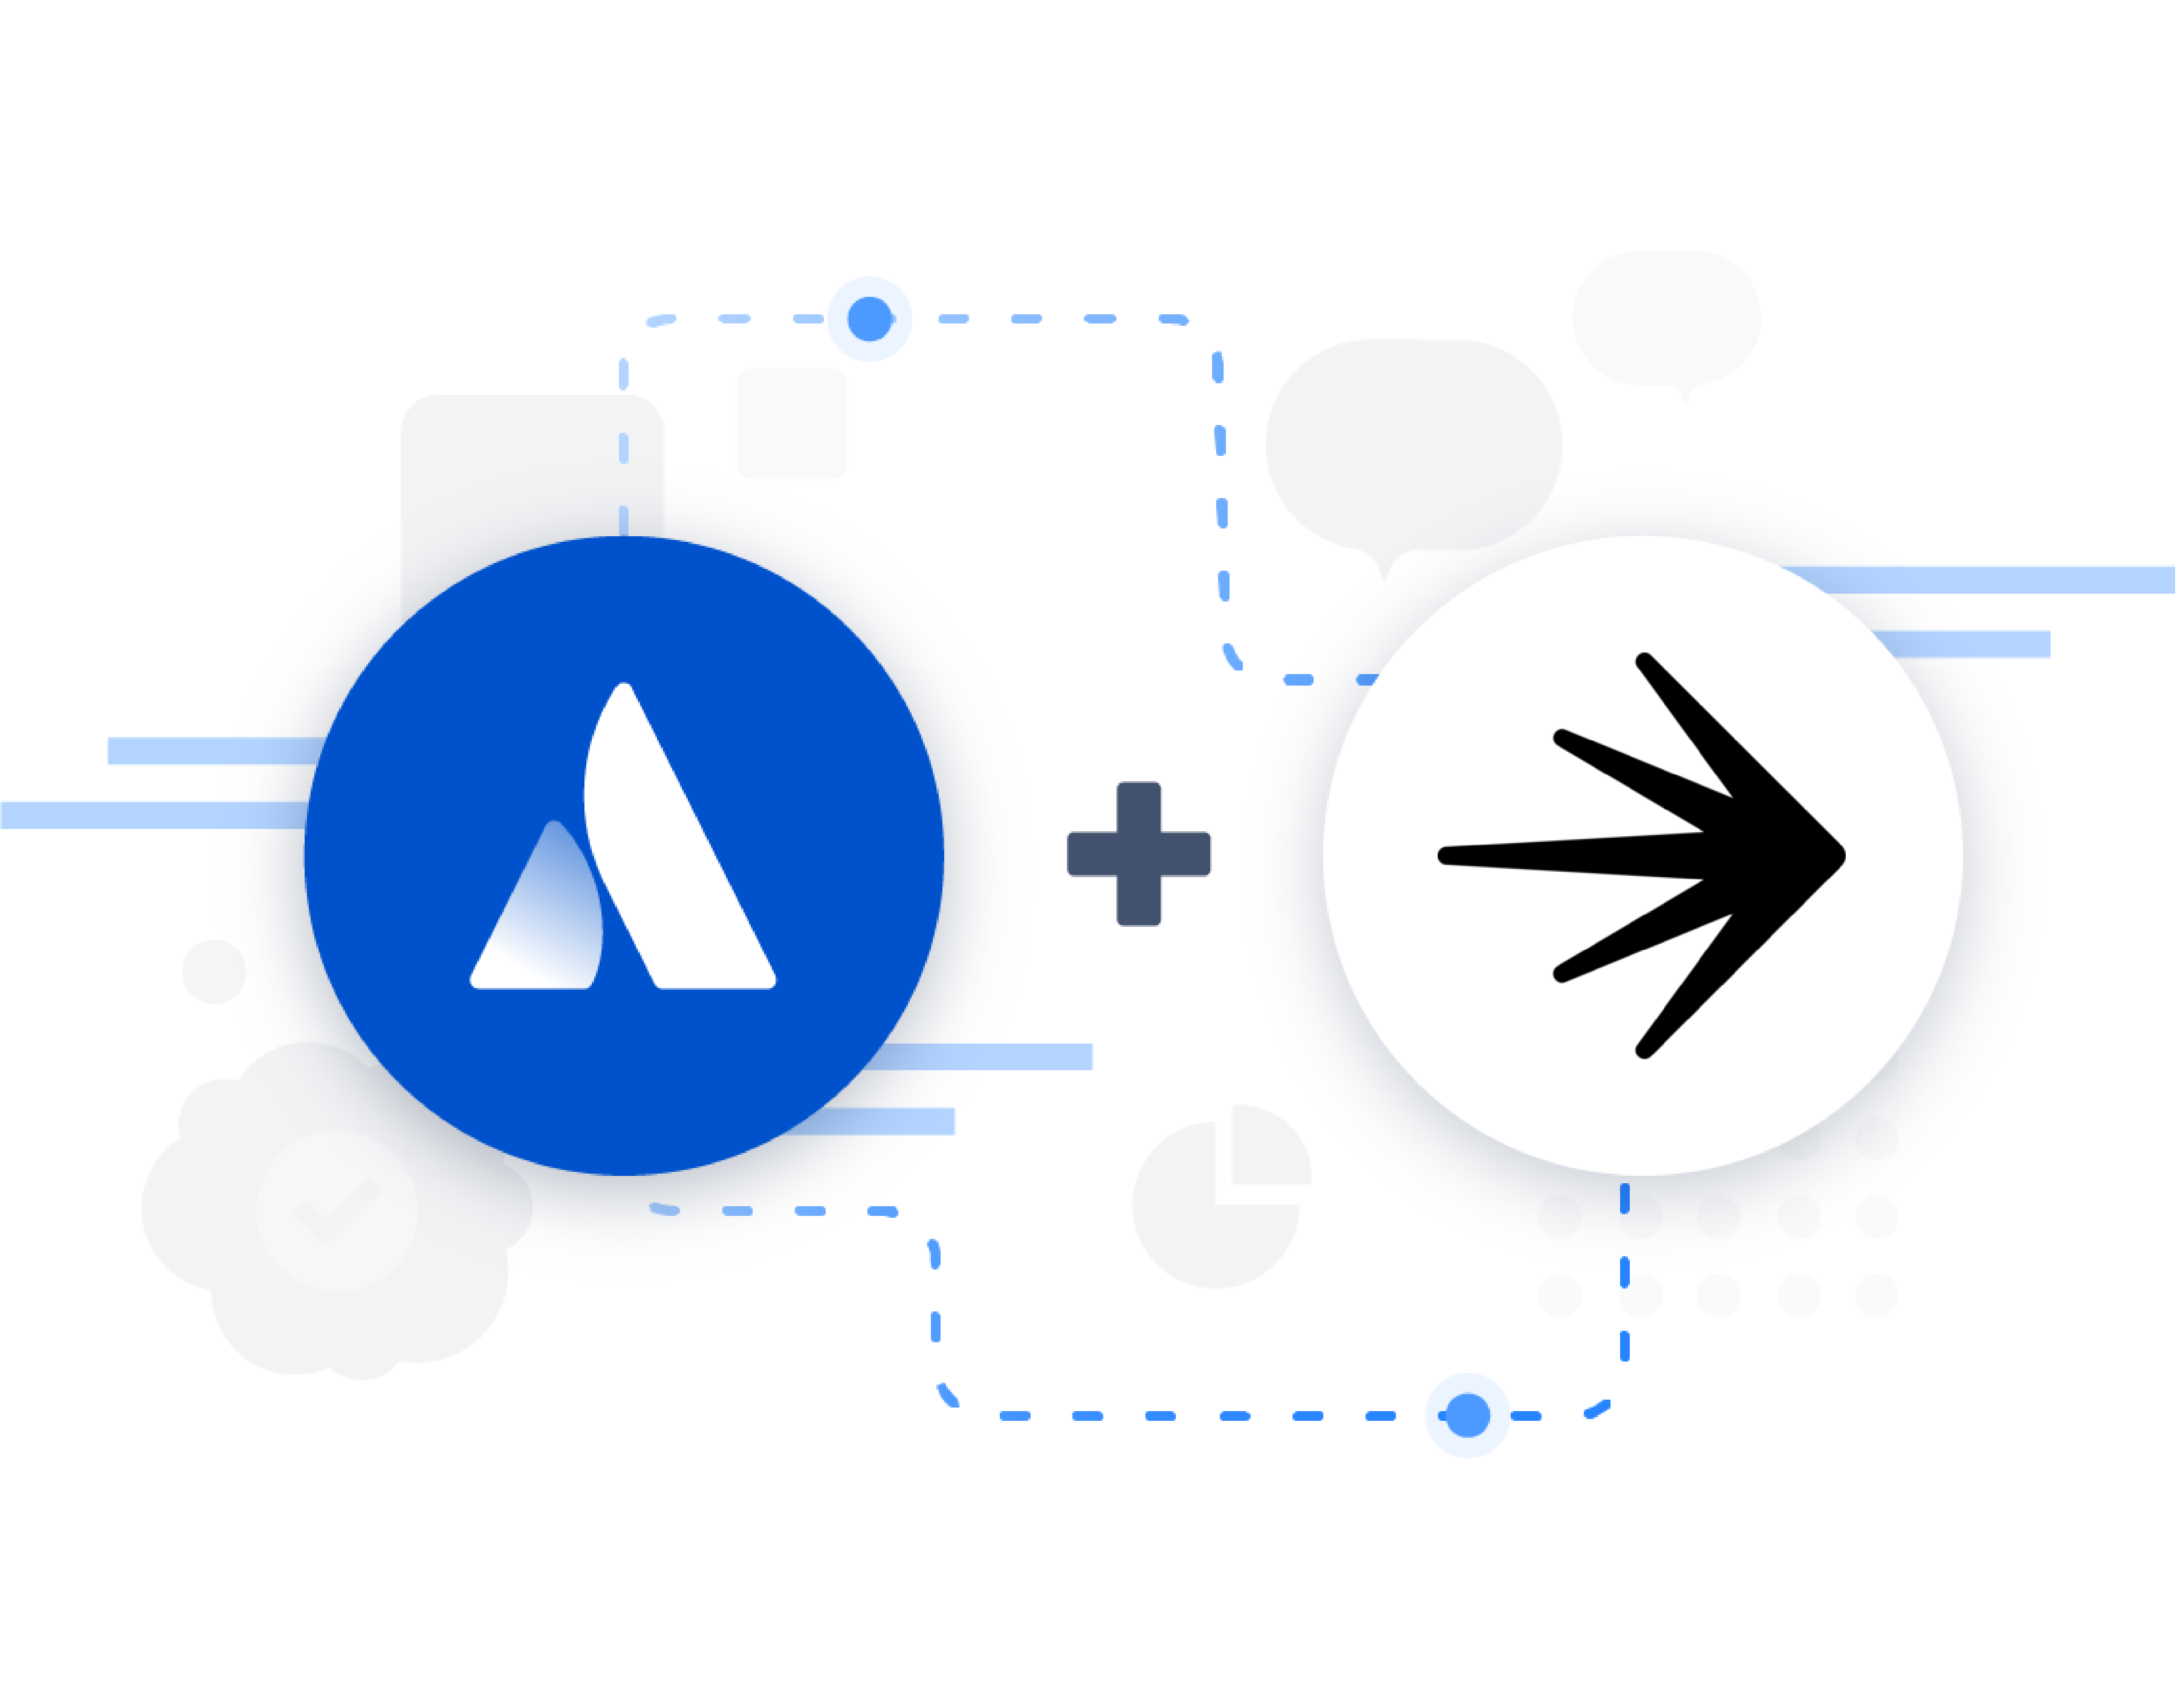 Atlassian + LaunchDarkly